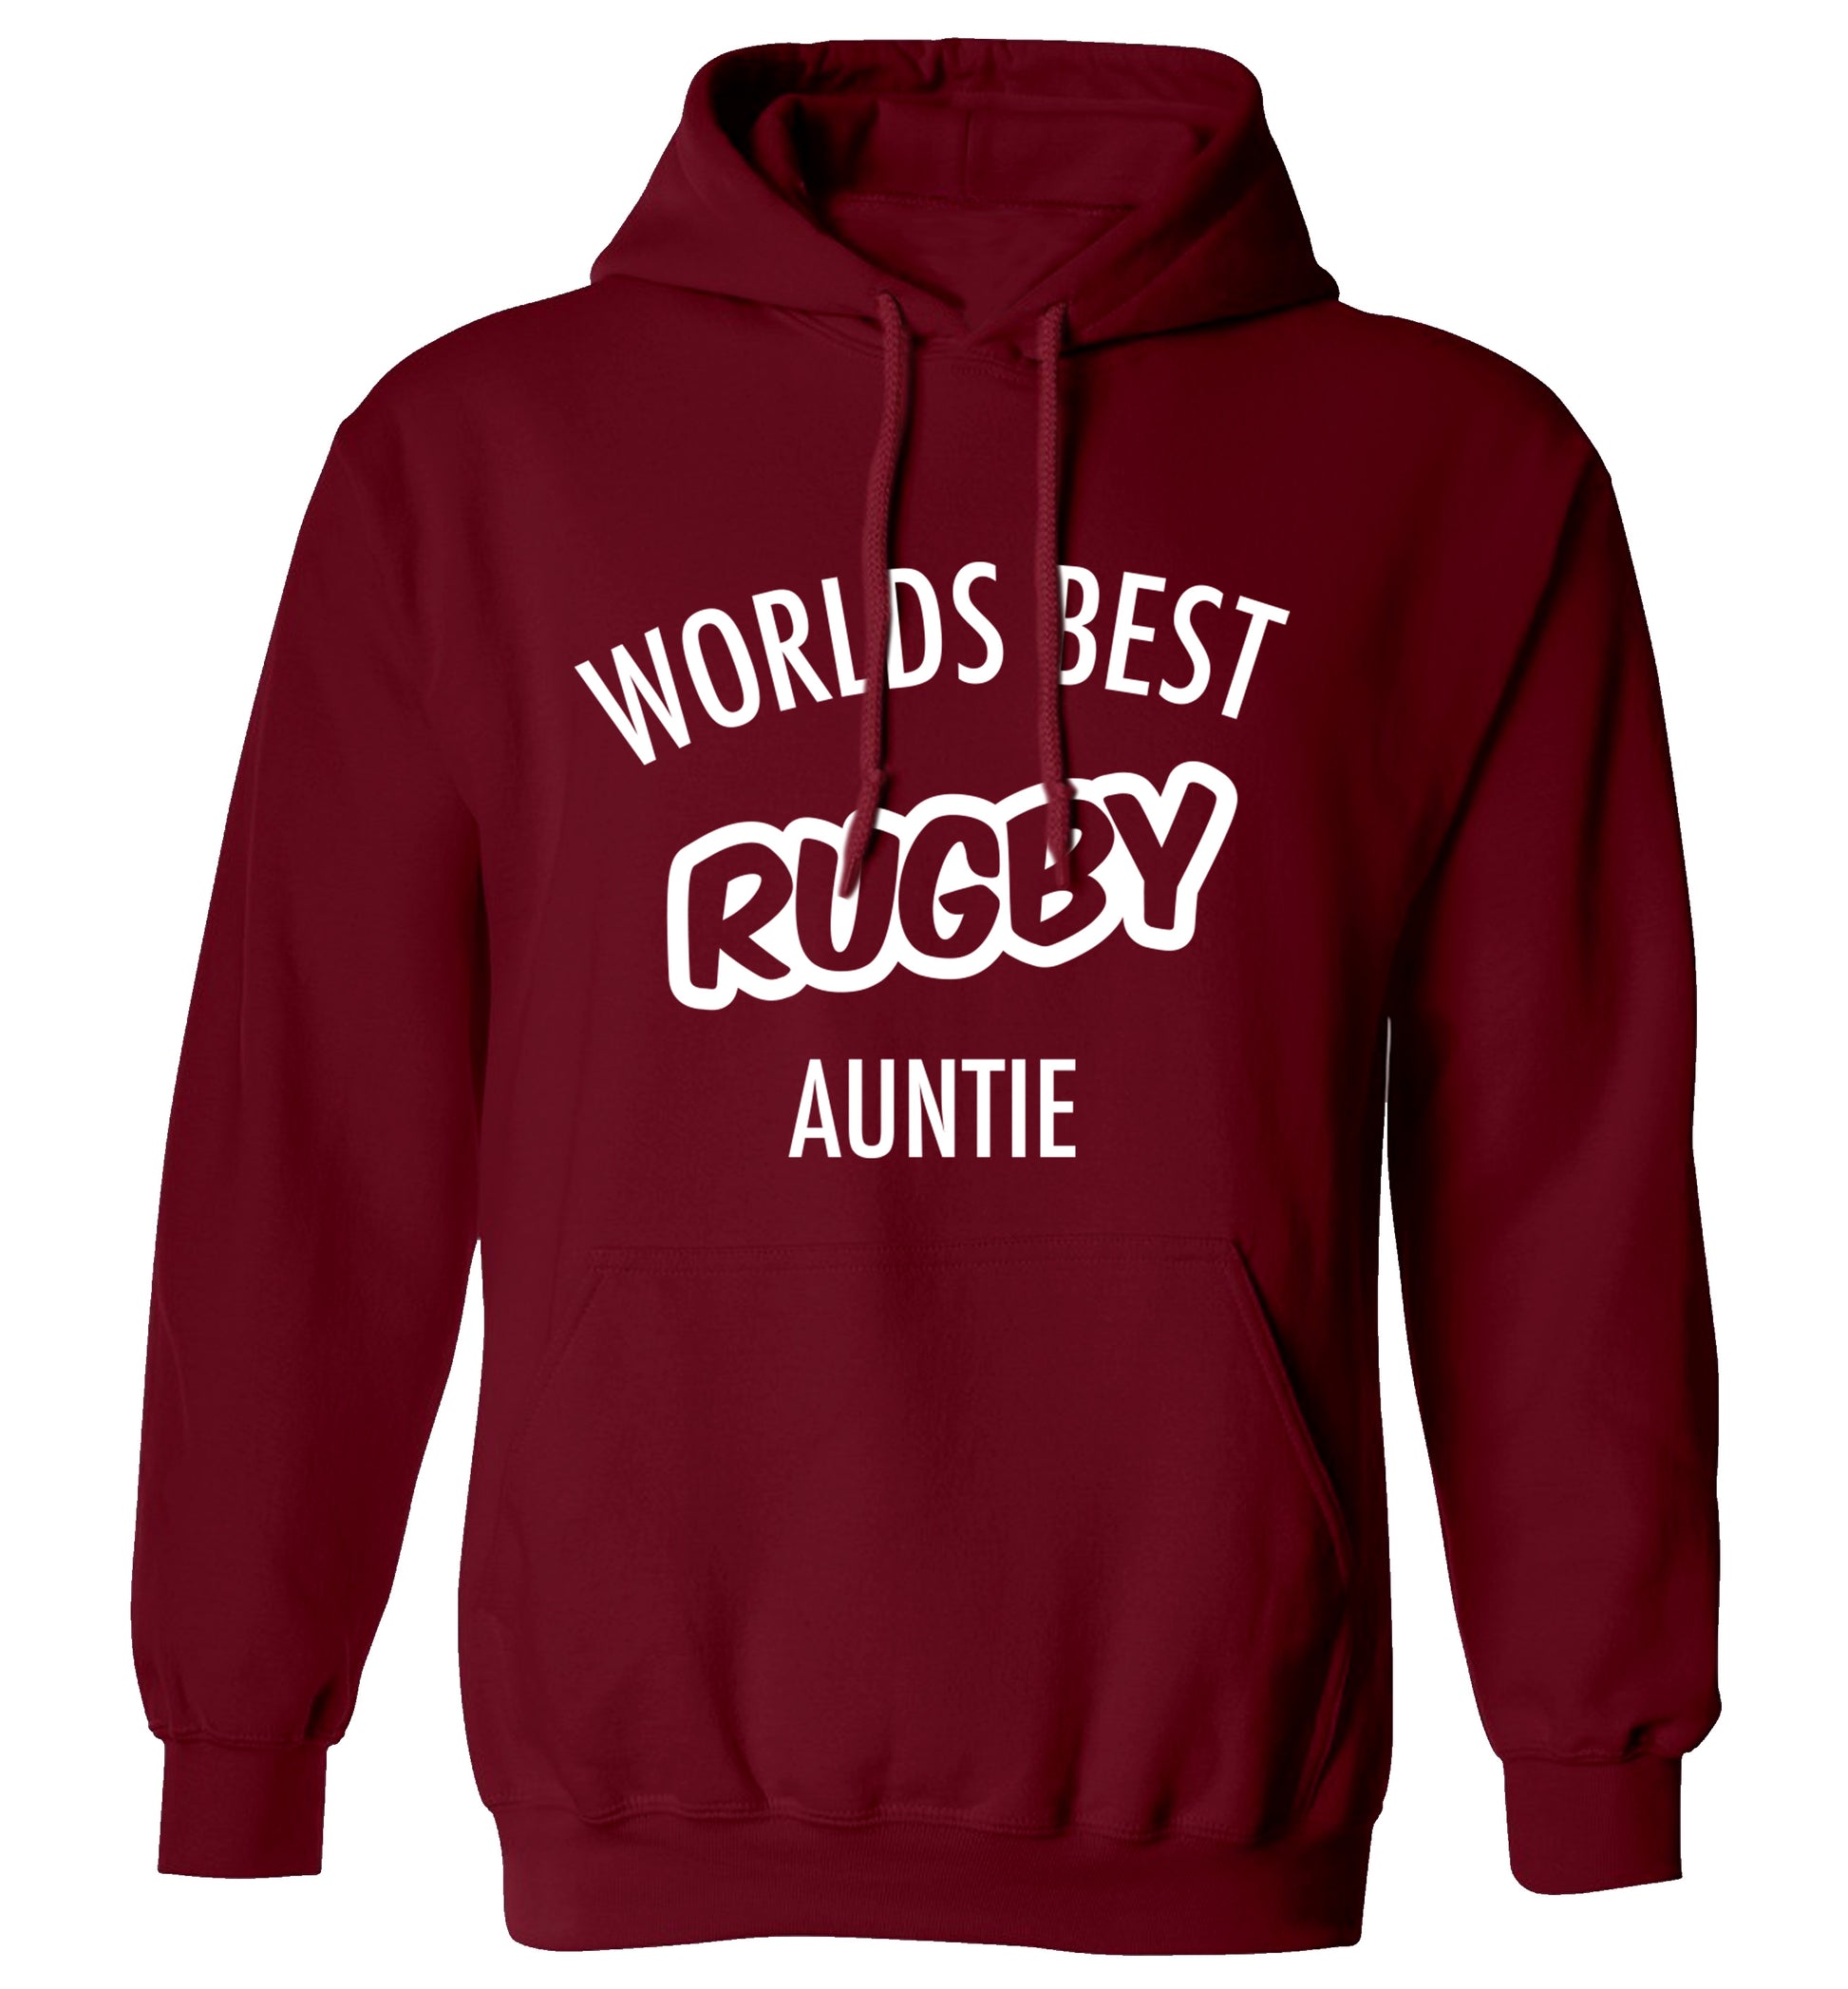 Worlds best rugby auntie adults unisex maroon hoodie 2XL